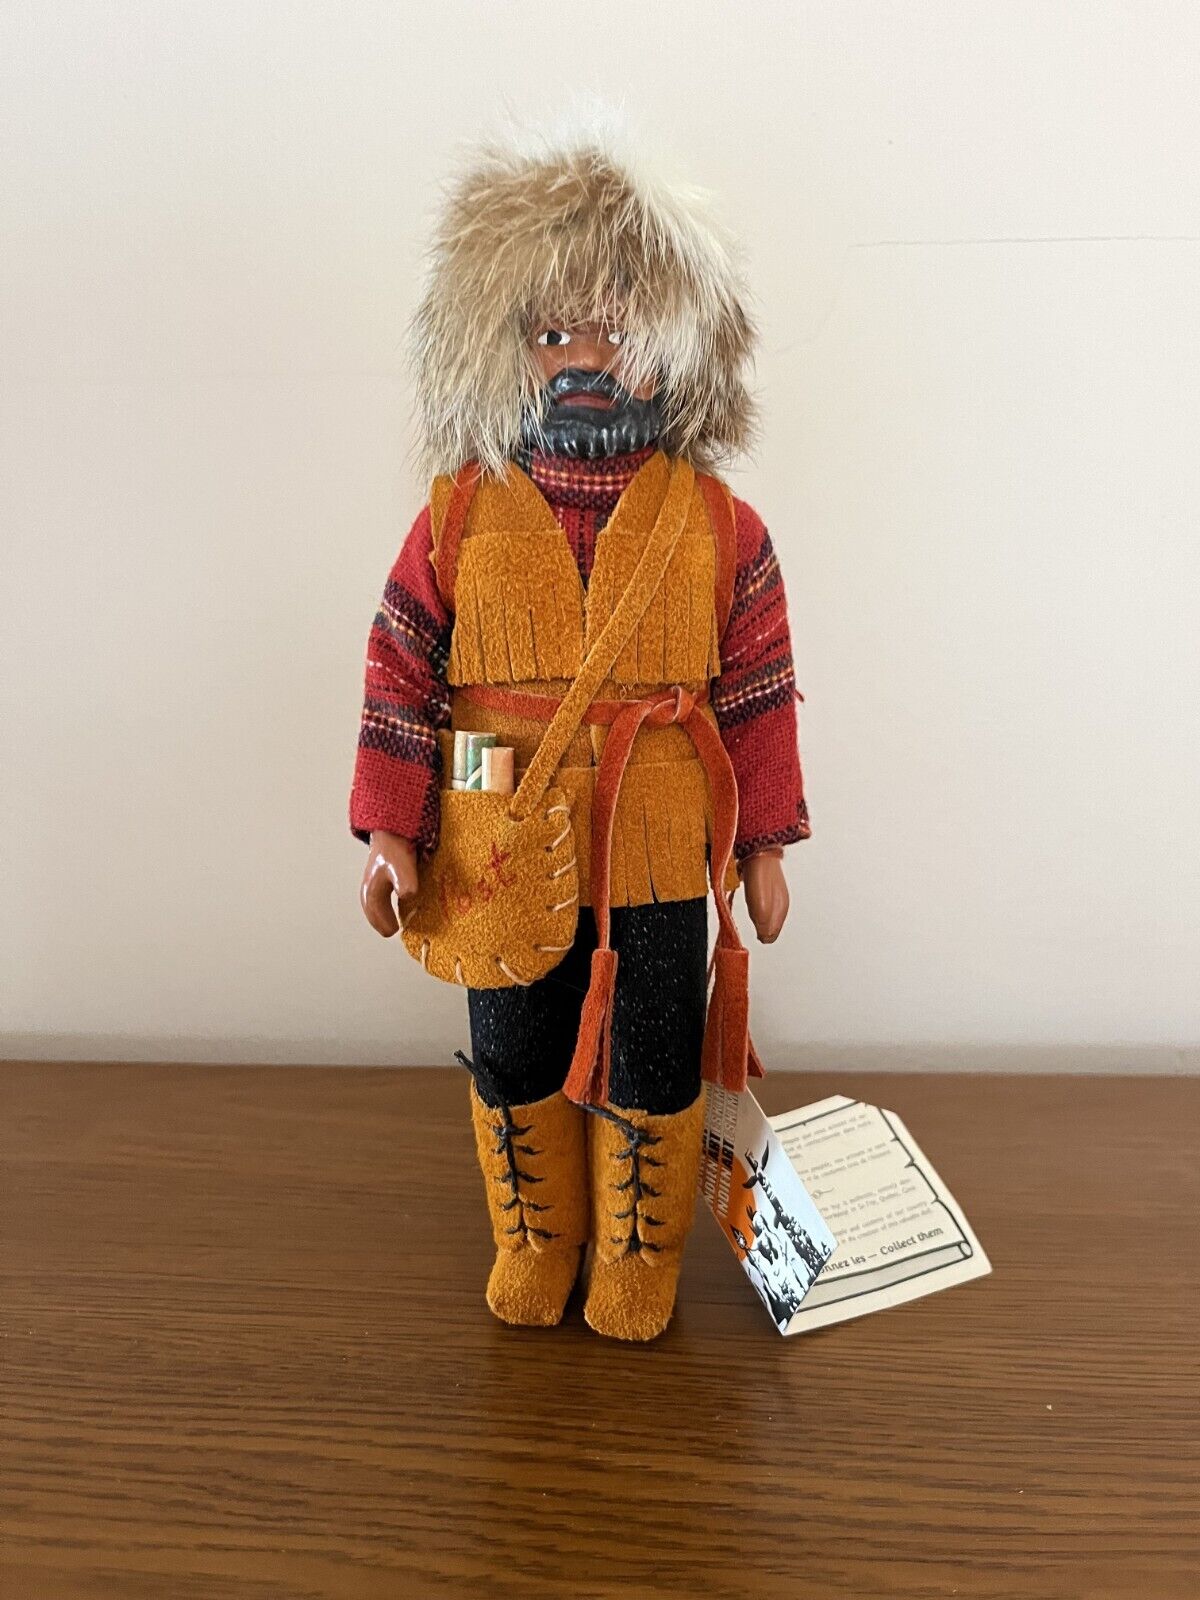 Vintage Indien Art Eskimo post man doll made in Canada Native American folk art